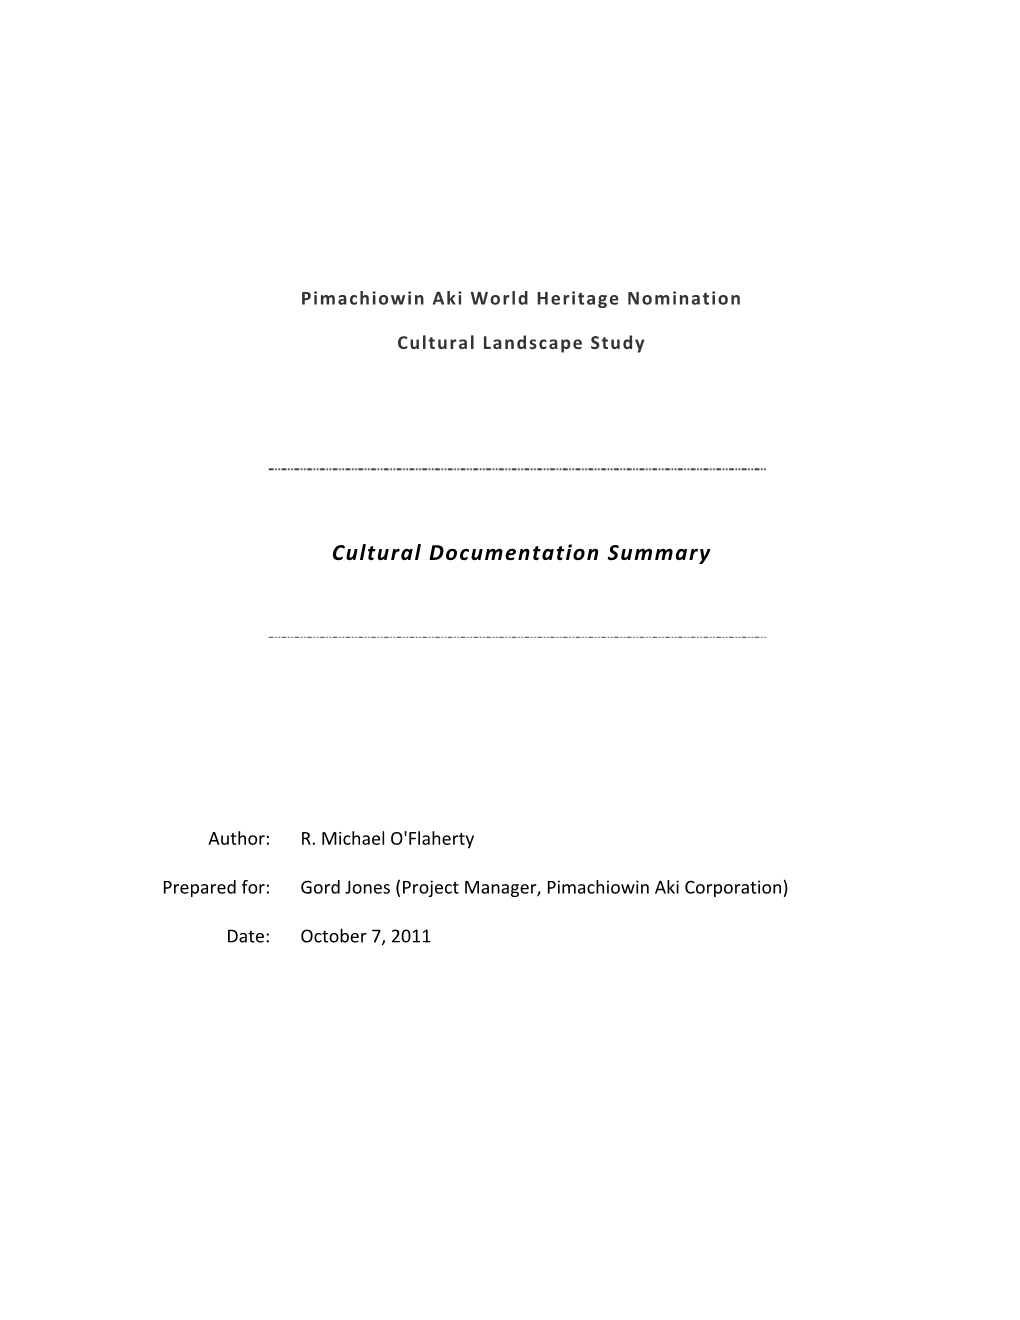 Cultural Documentation Summary